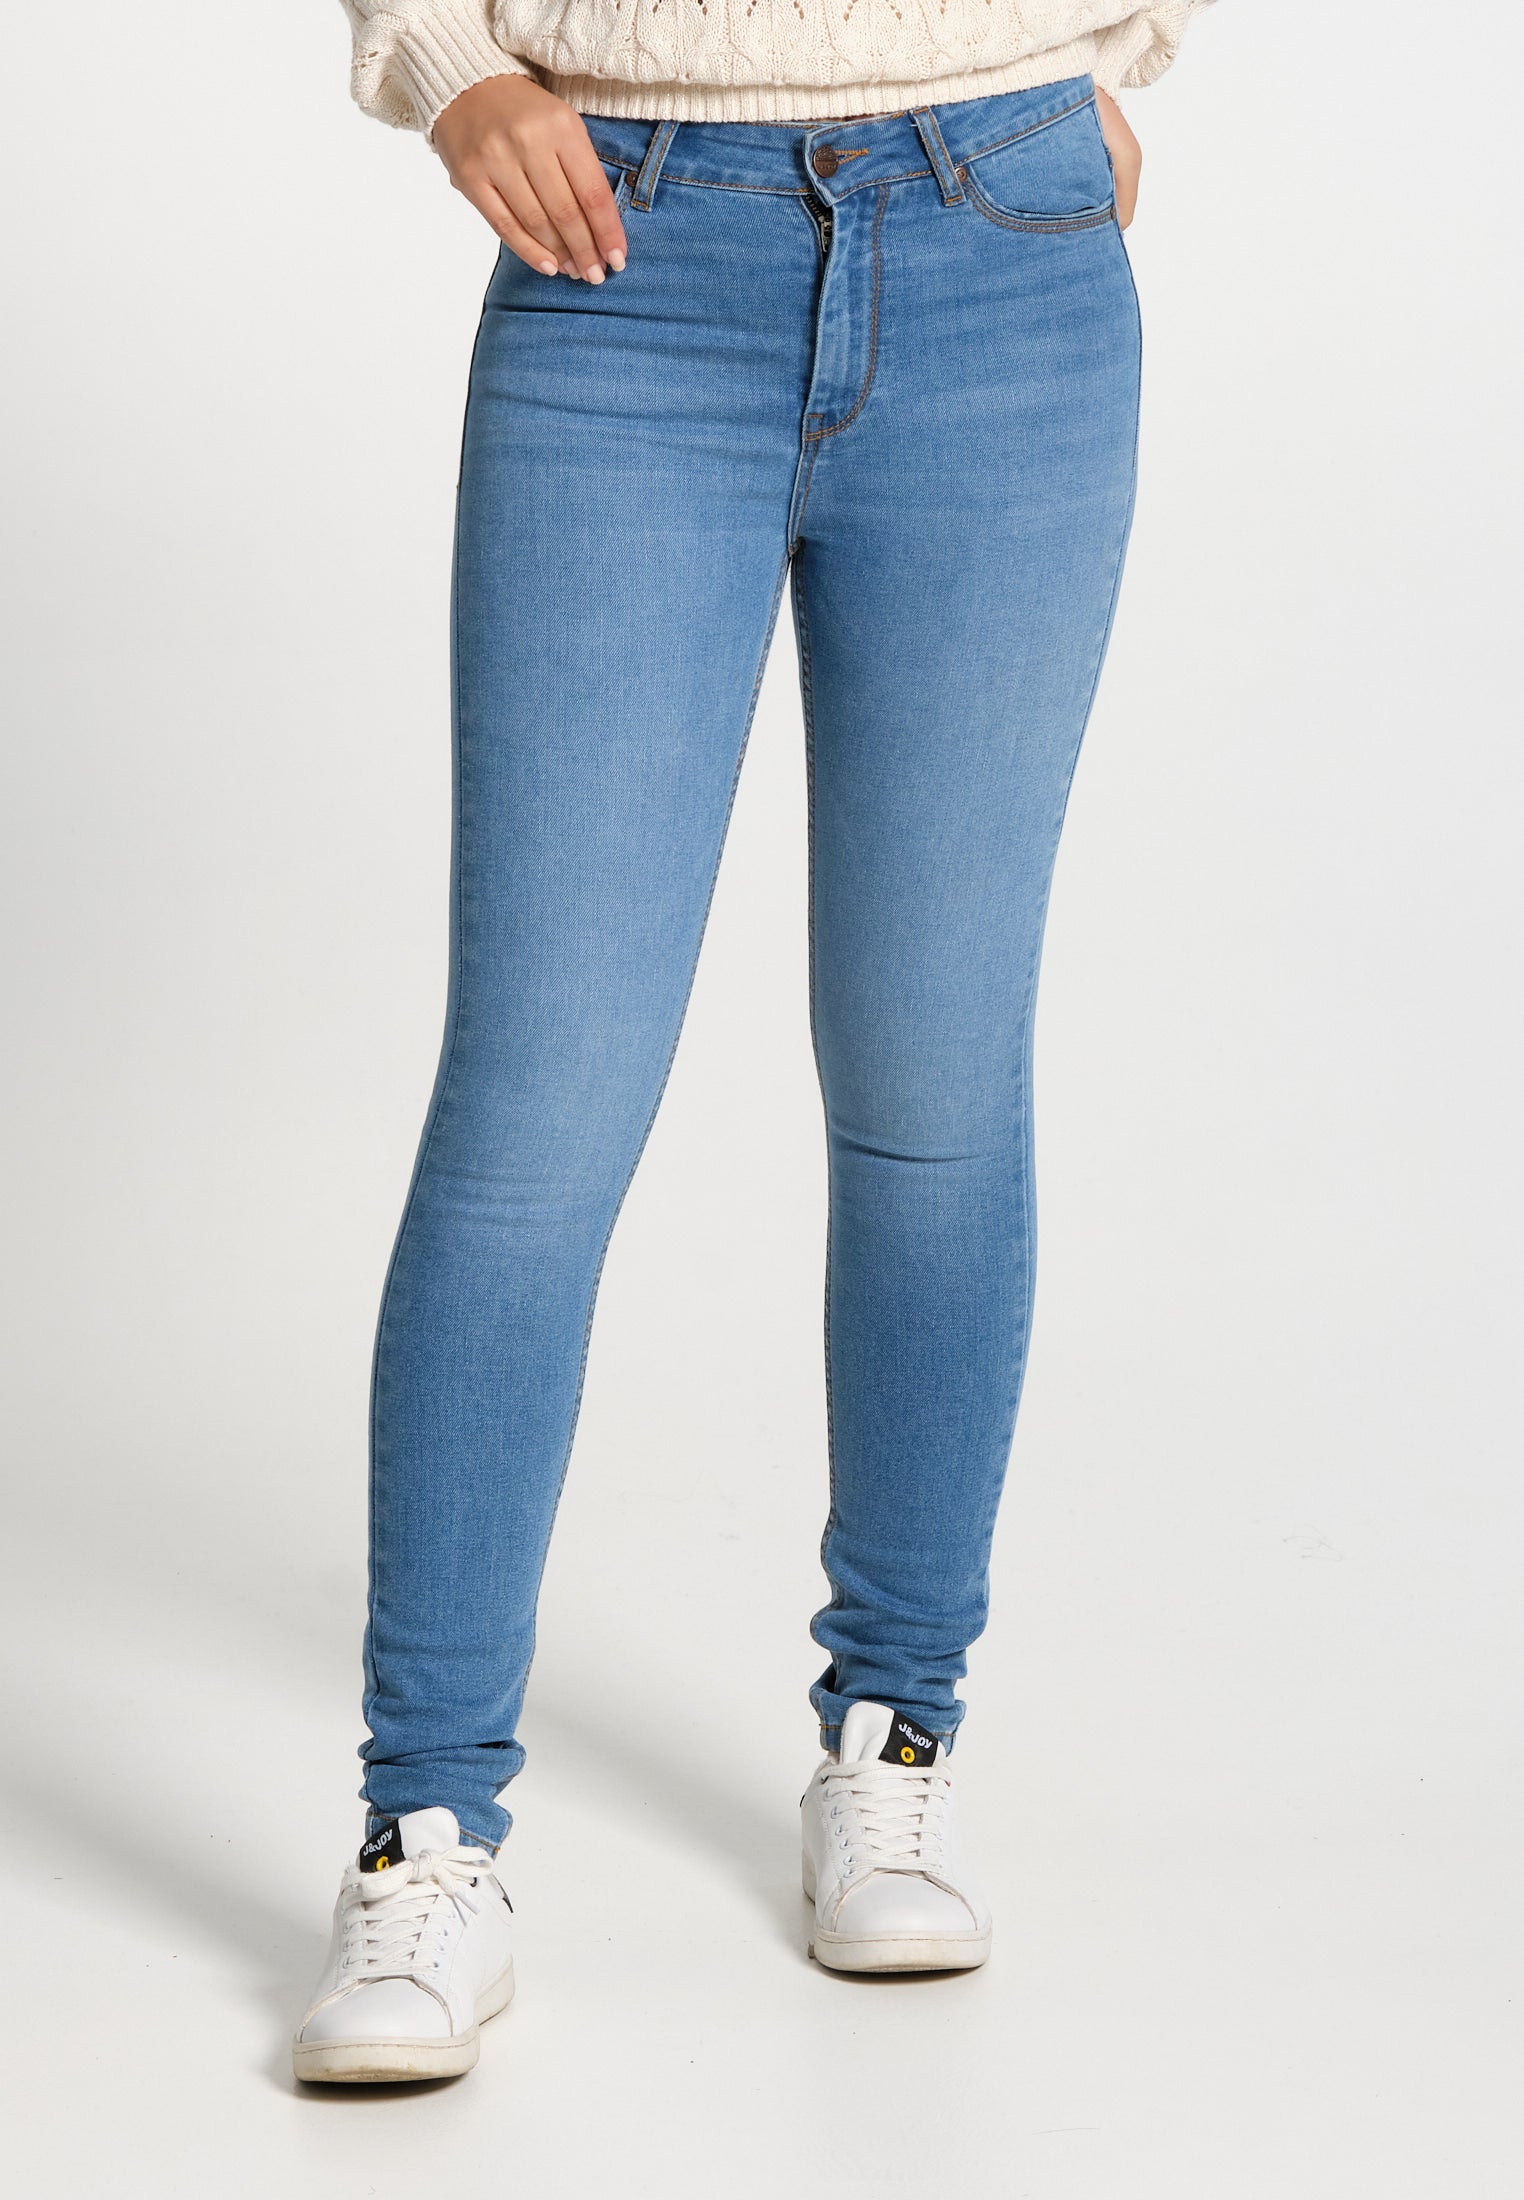 Jeans Femme 01 Light Blue Denim Slim Fit | J&JOY.